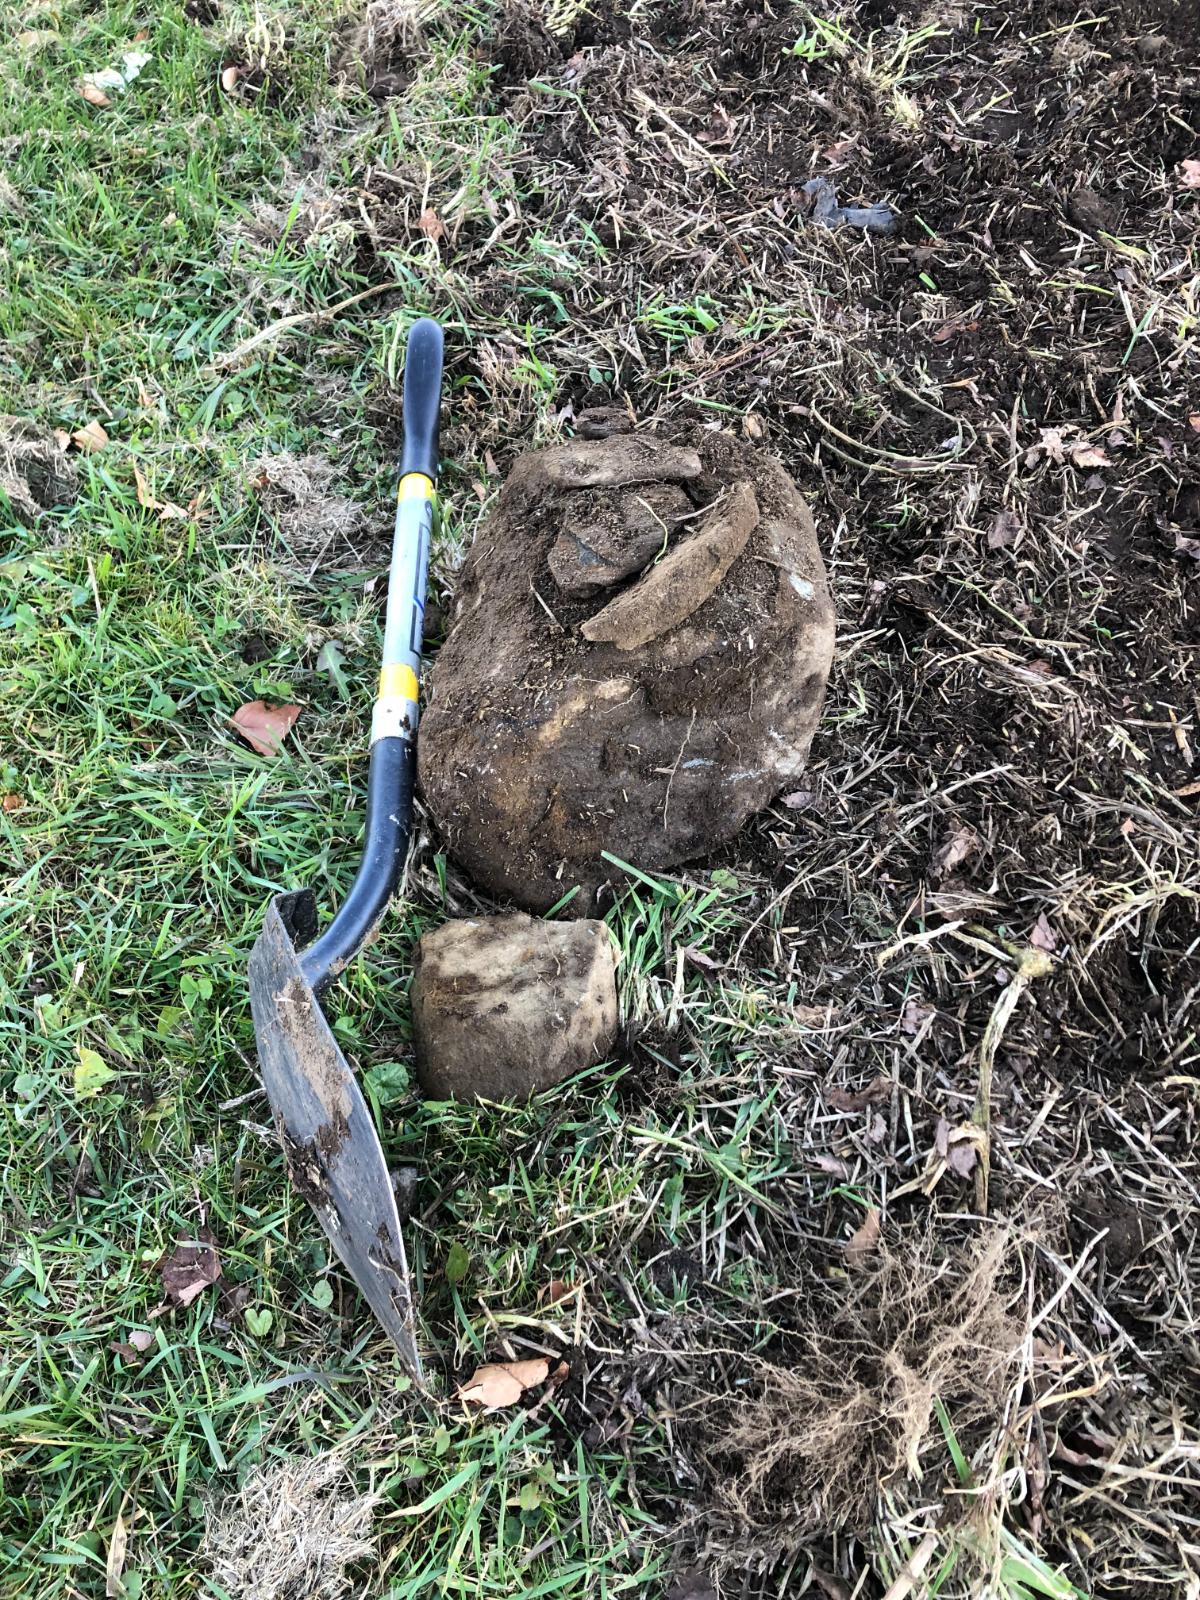 Large rocks dug from a garden